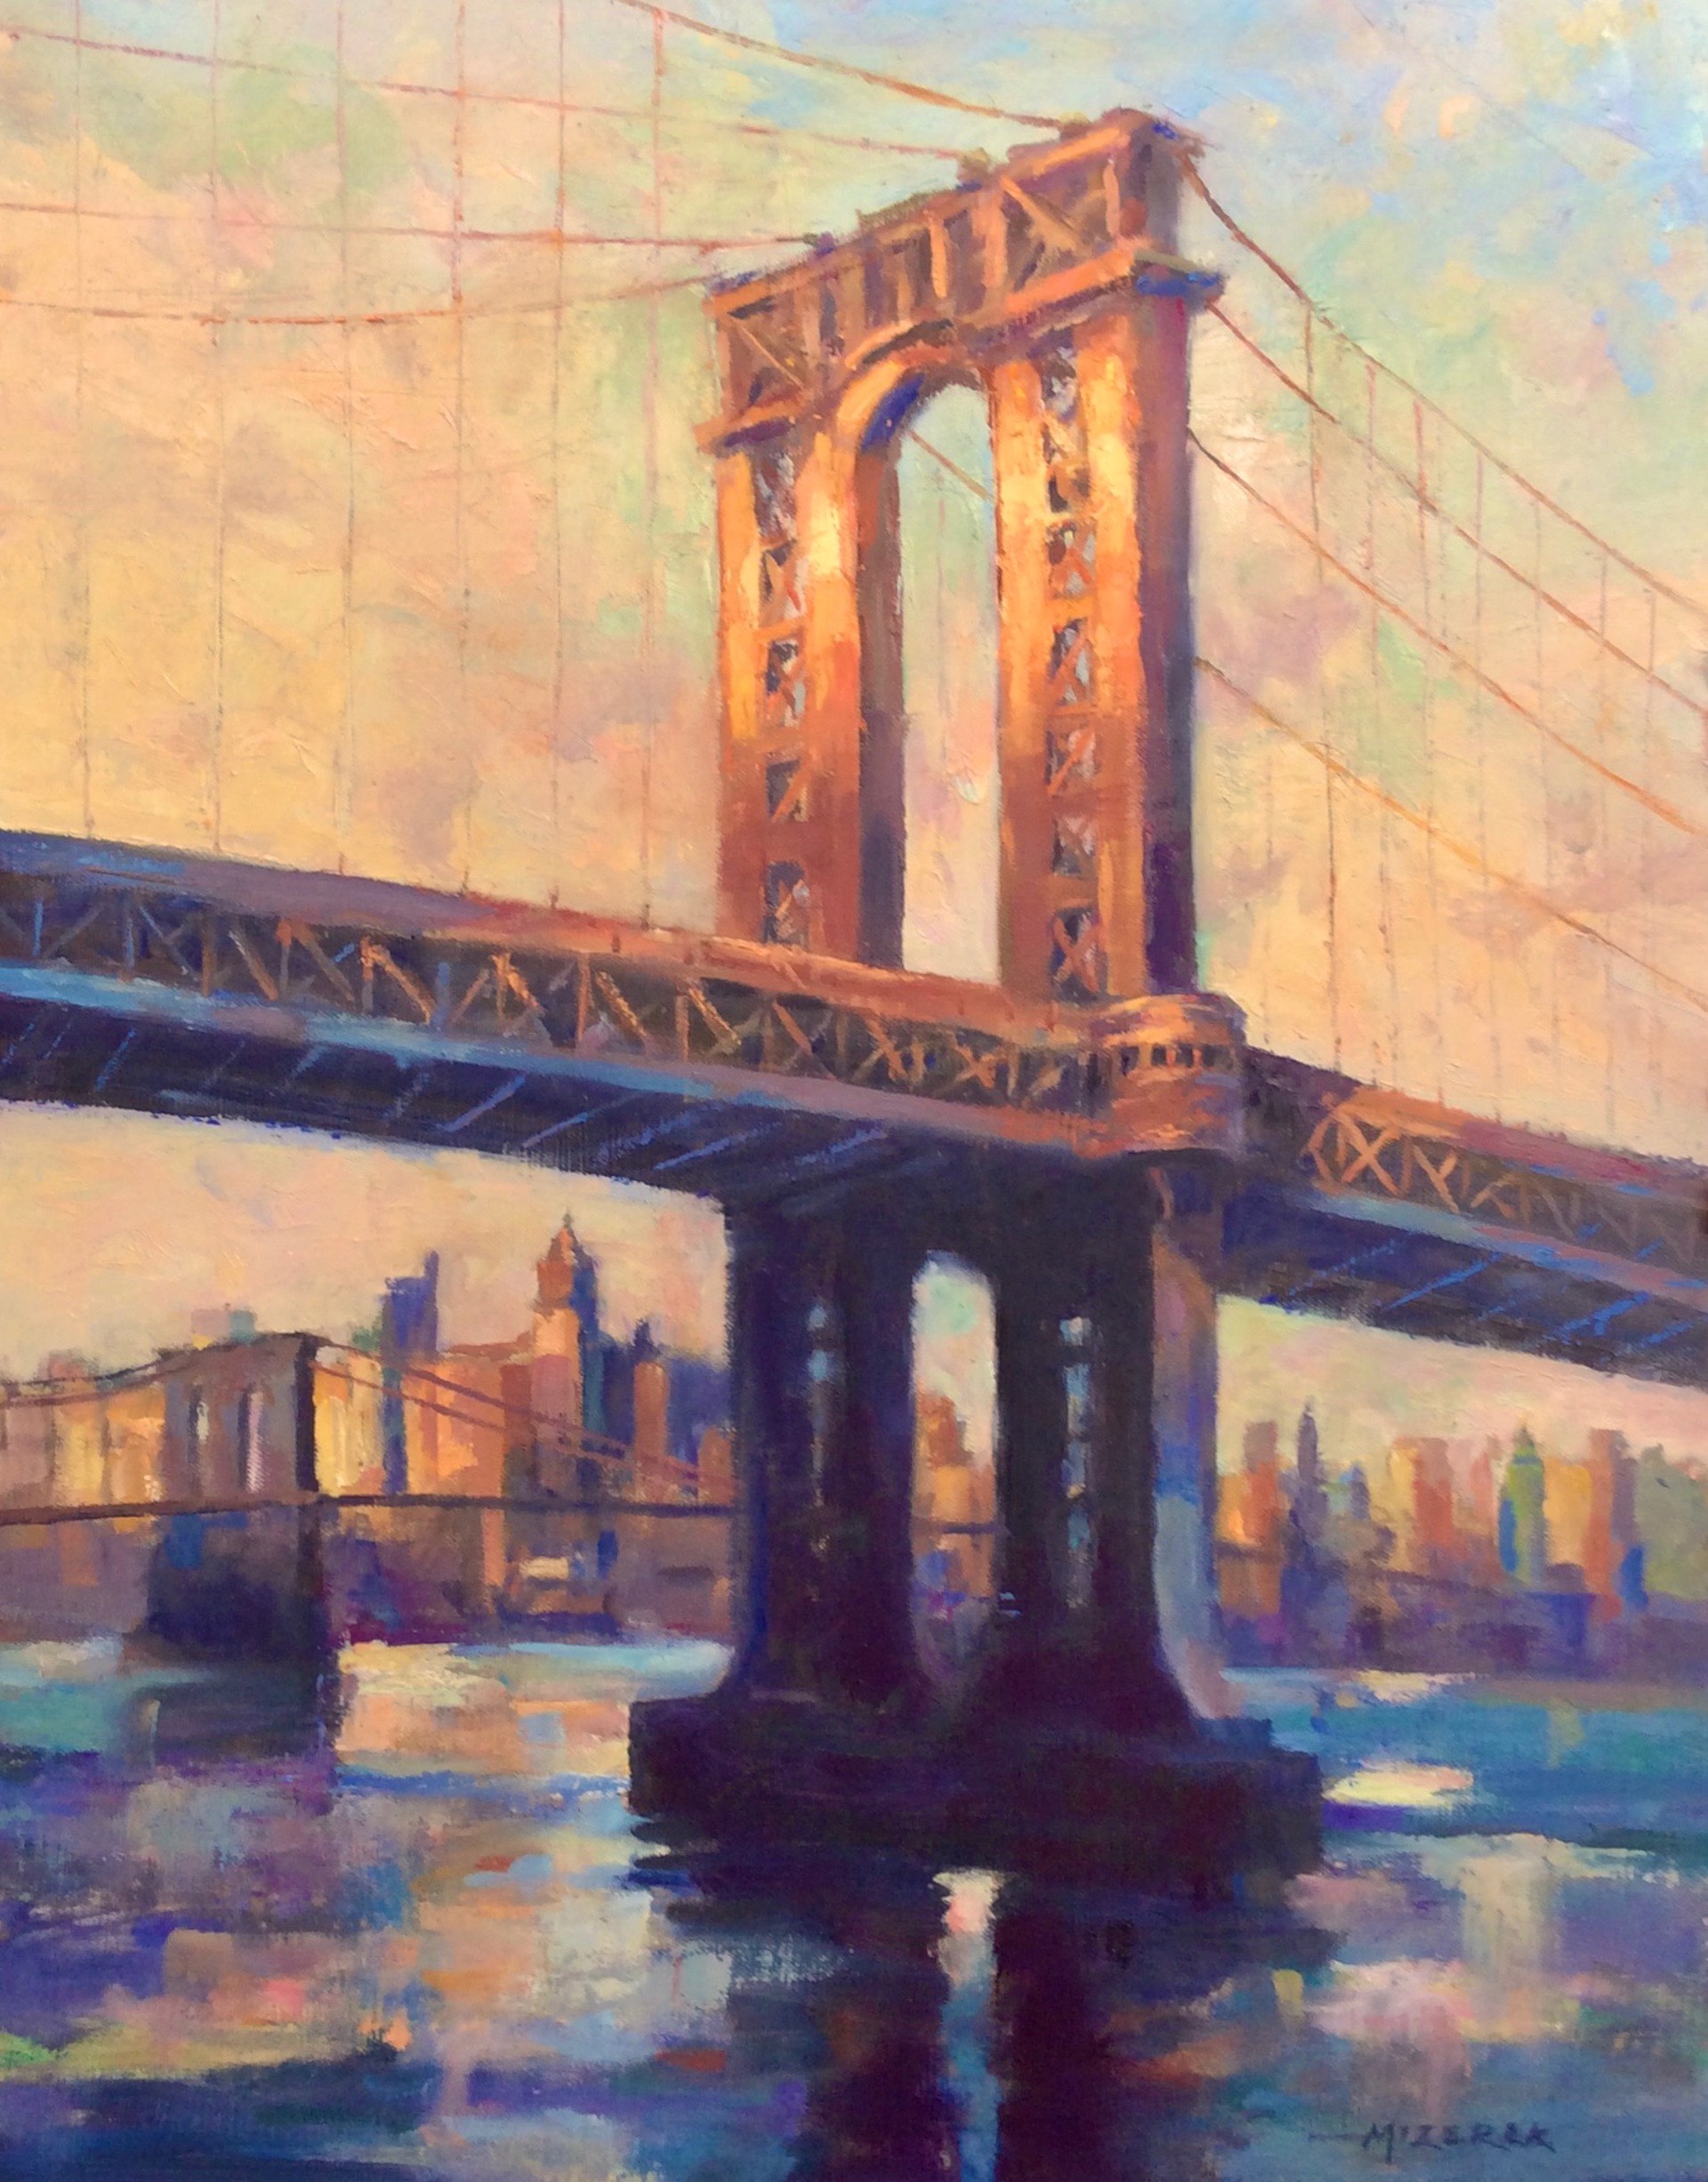 "Manhattan Bridge" by Leonard Mizerek